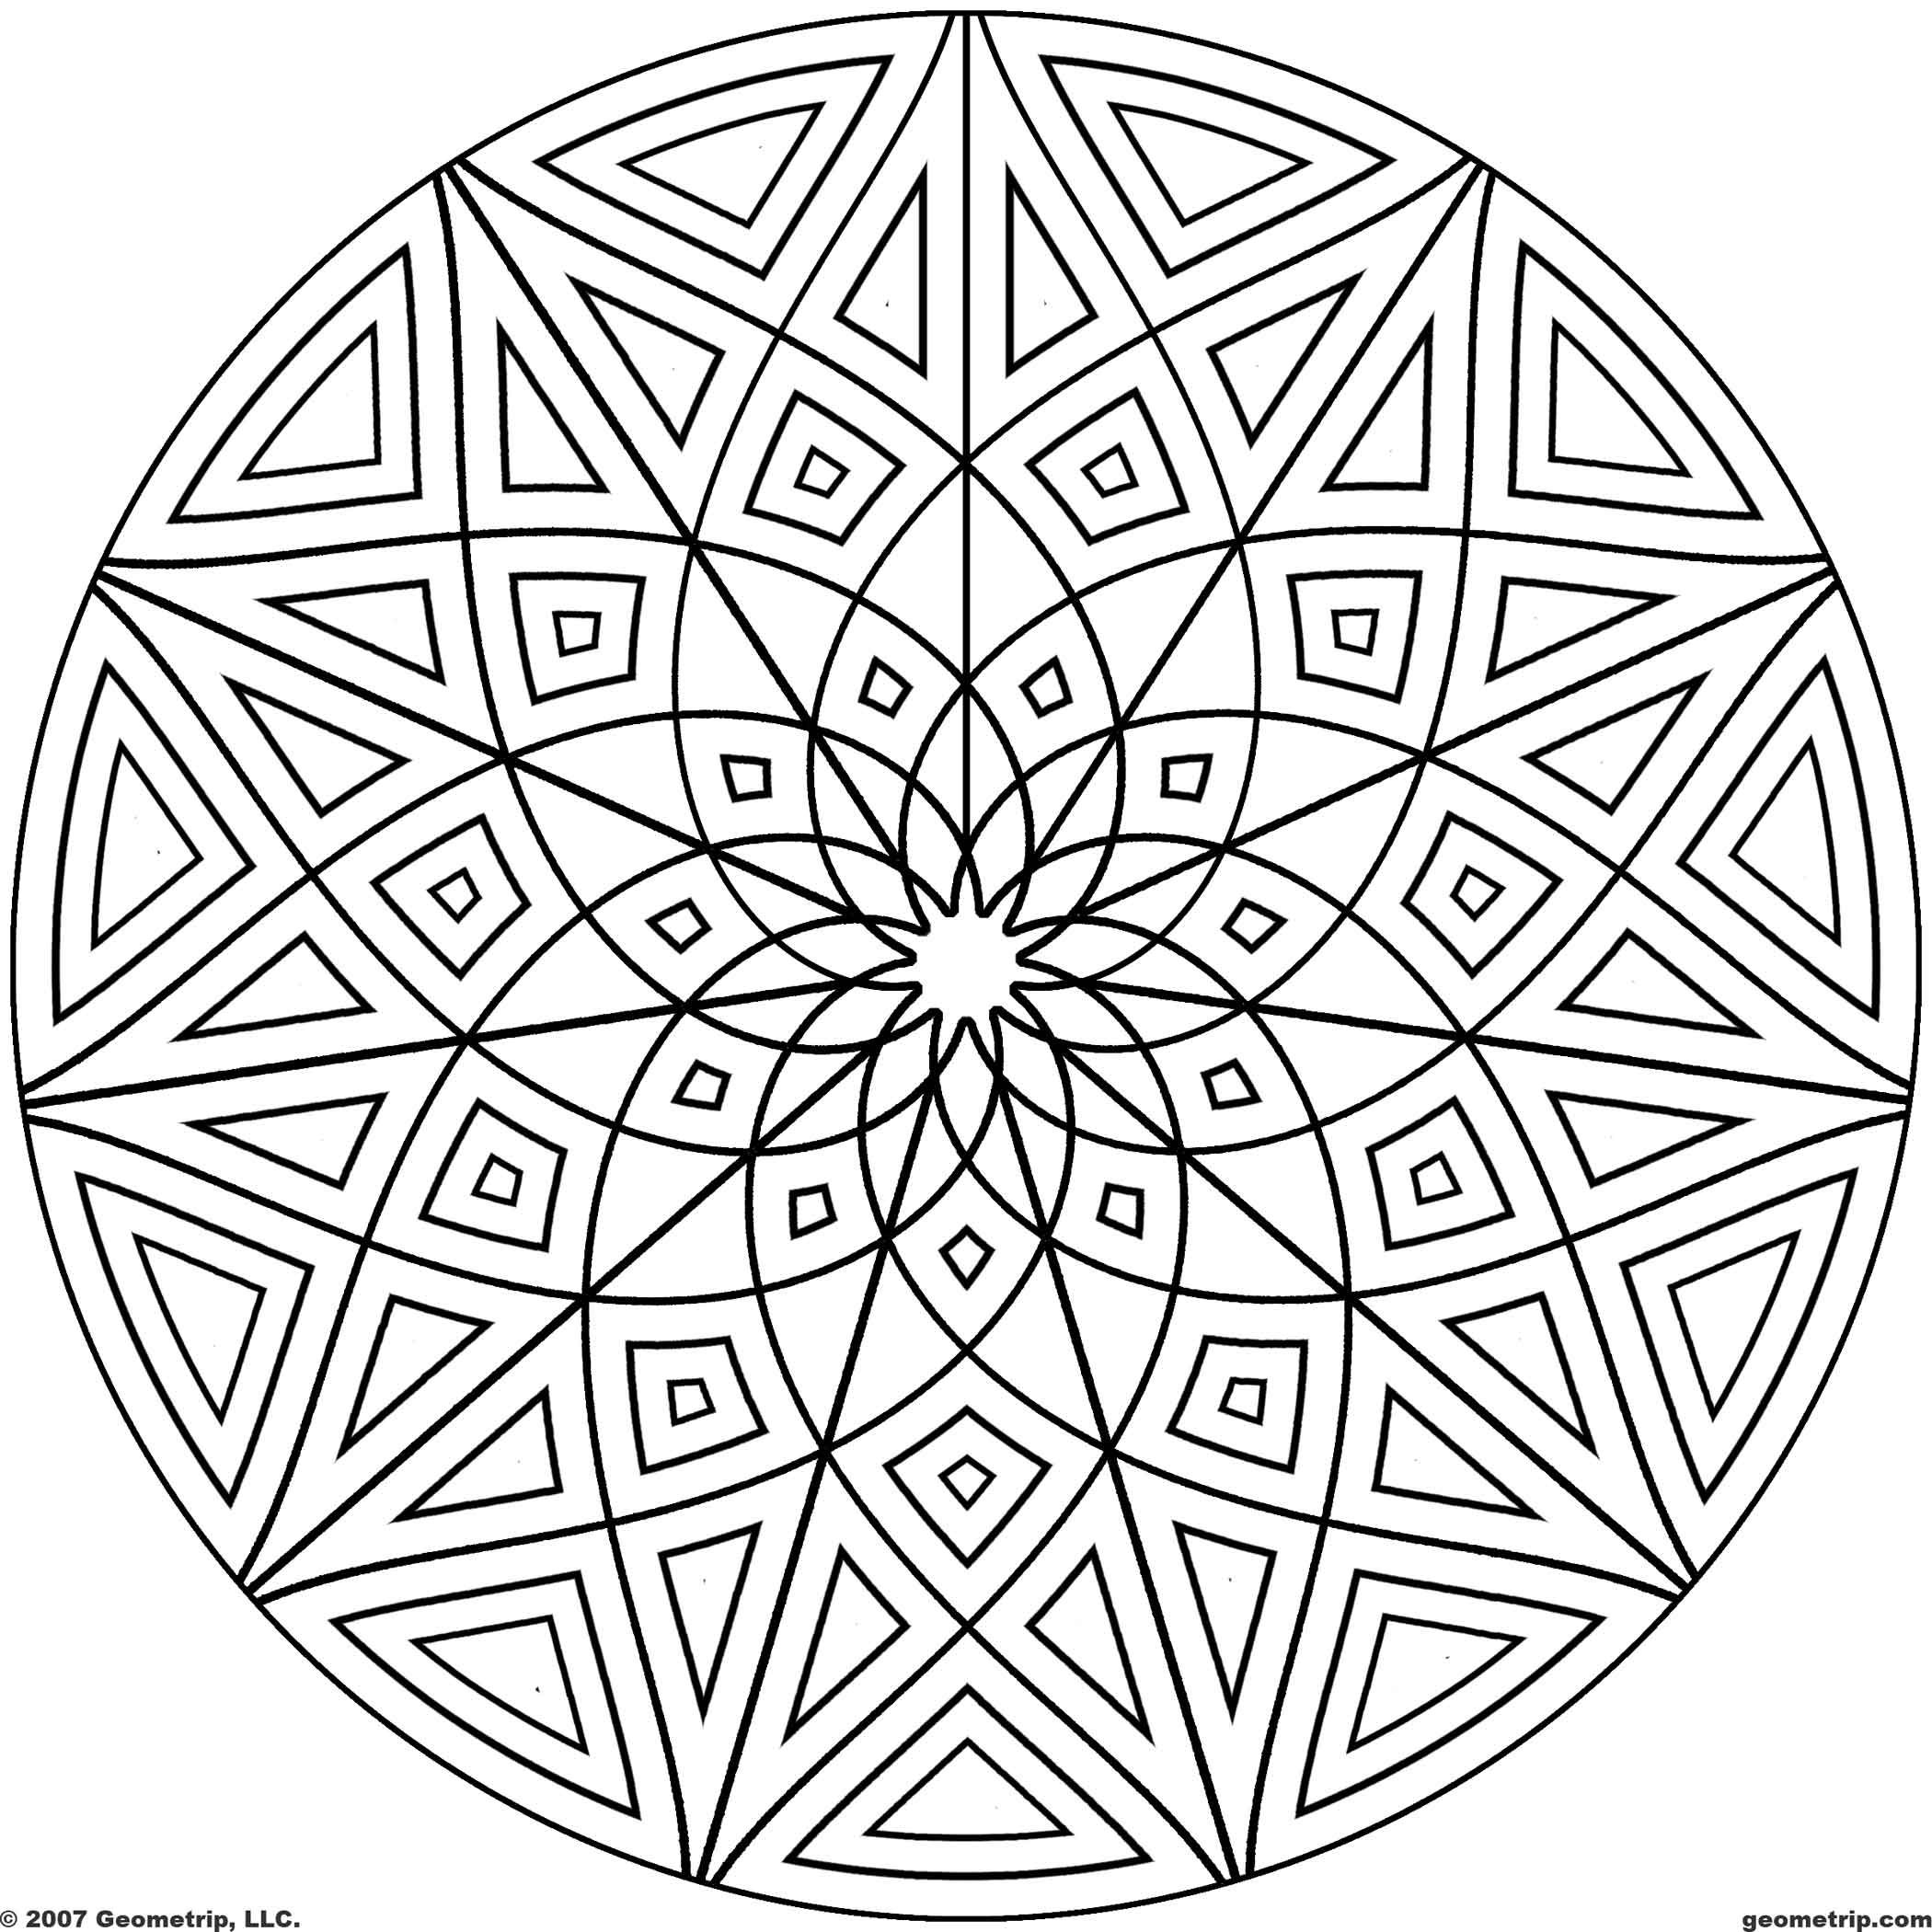 Geometrip.com - Free Geometric Coloring Designs - Circles | Geometric coloring  pages, Geometric patterns coloring, Pattern coloring pages